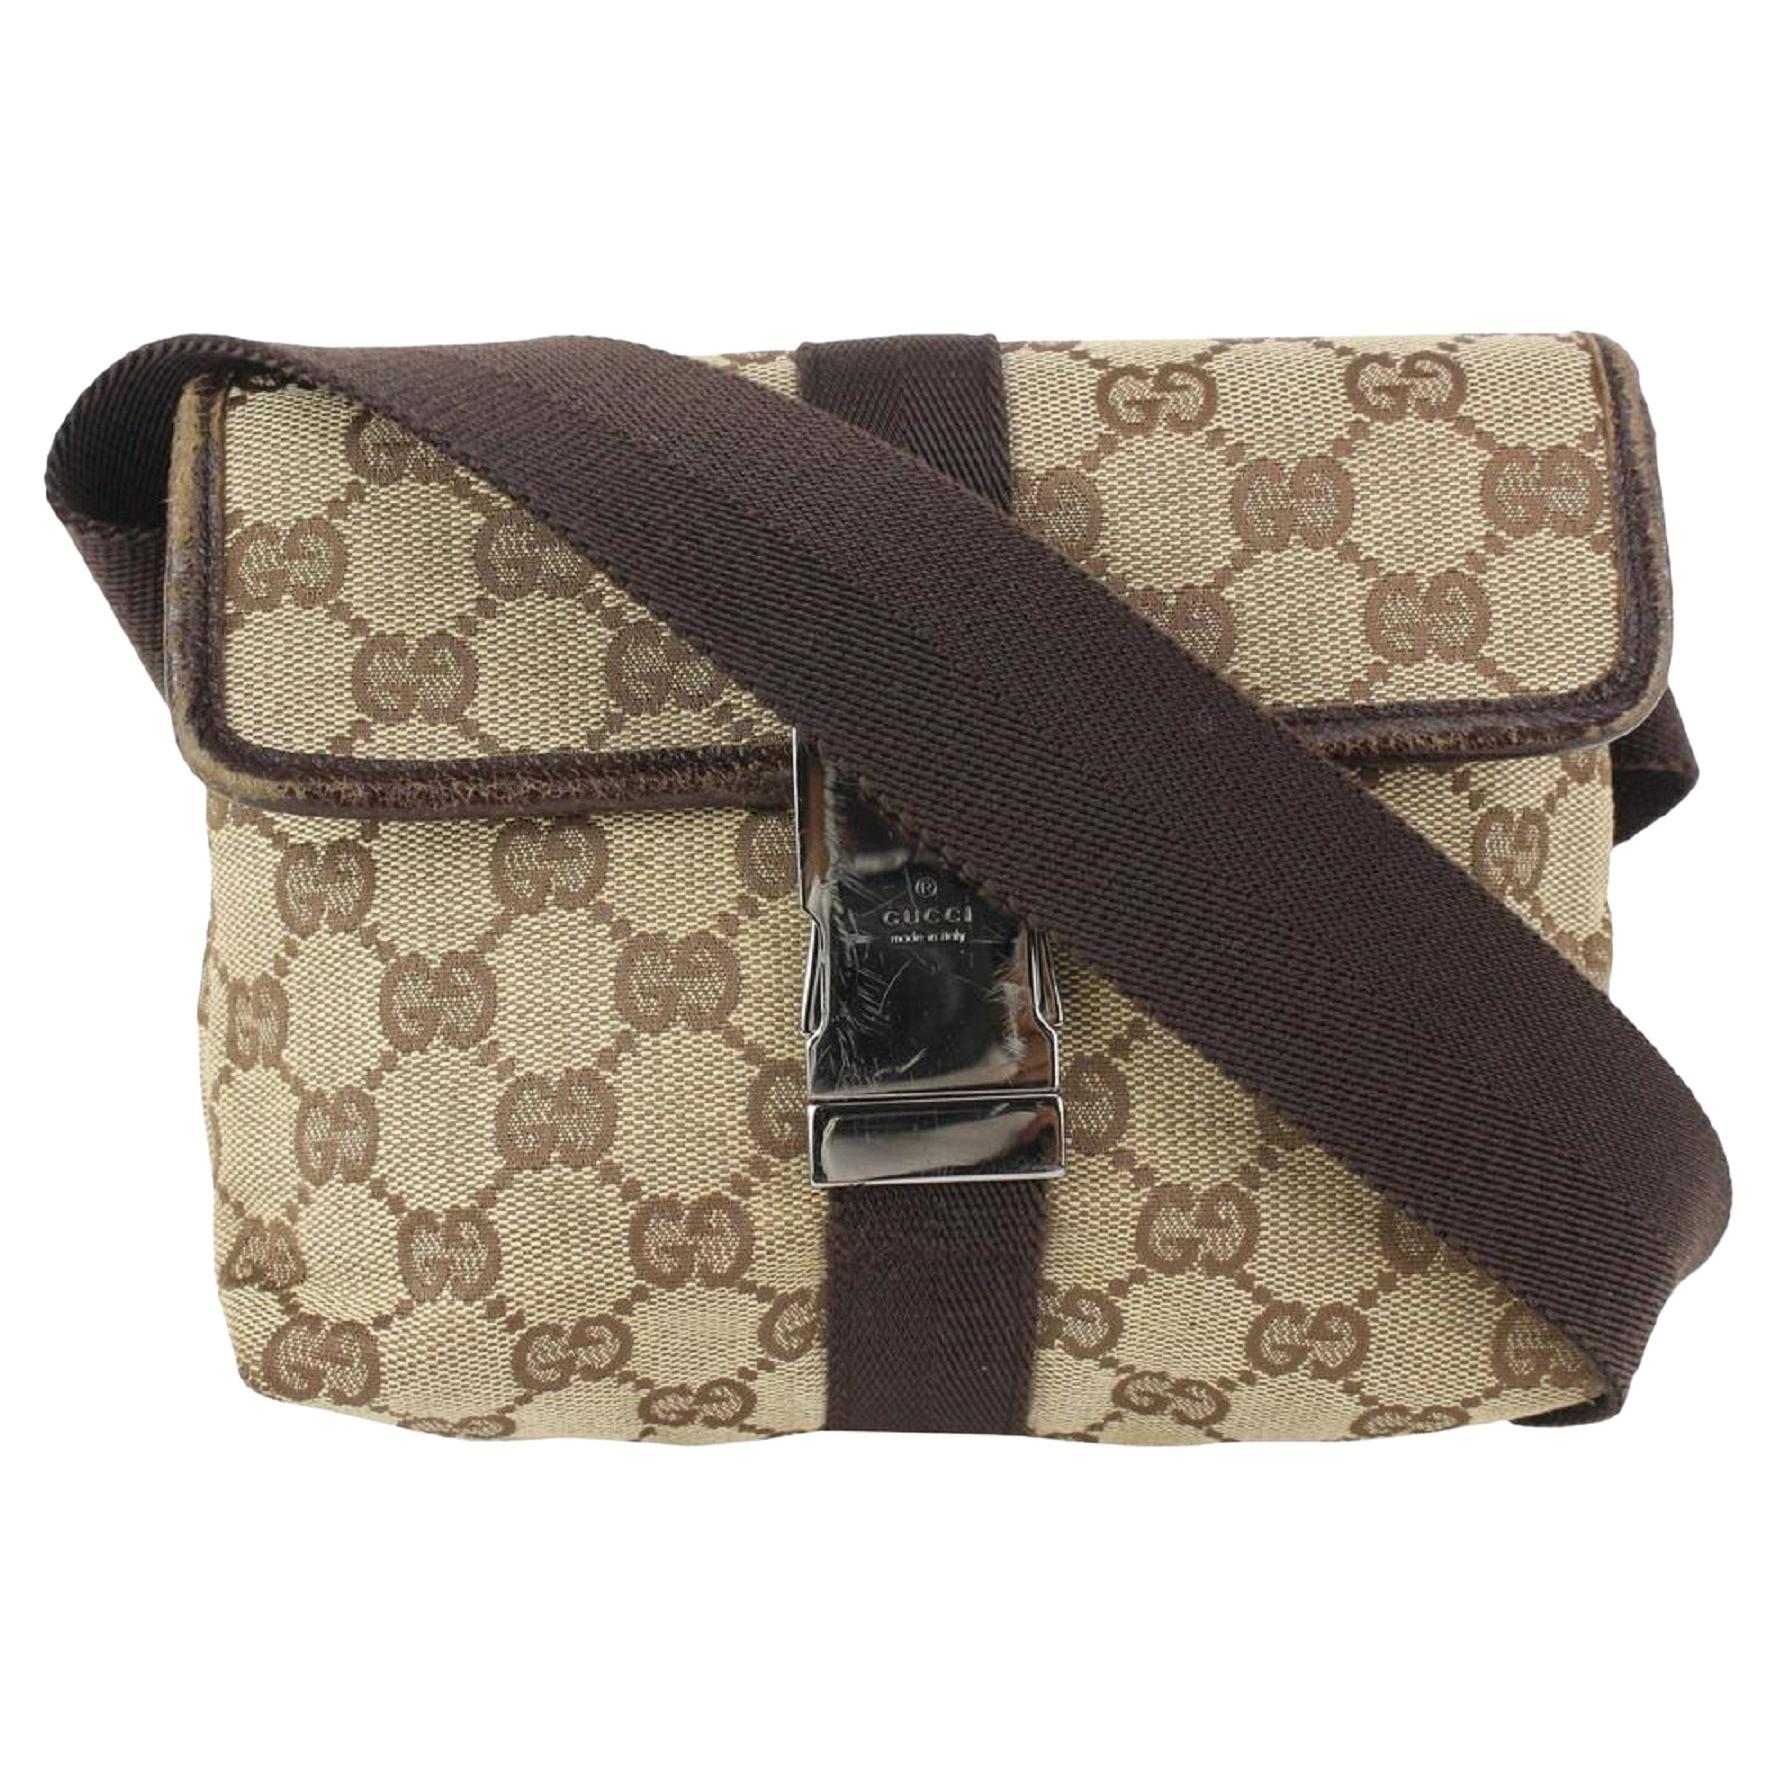 Gucci Monogram GG Belt Pouch Fanny Pack Waist Bag 913gk20 For Sale